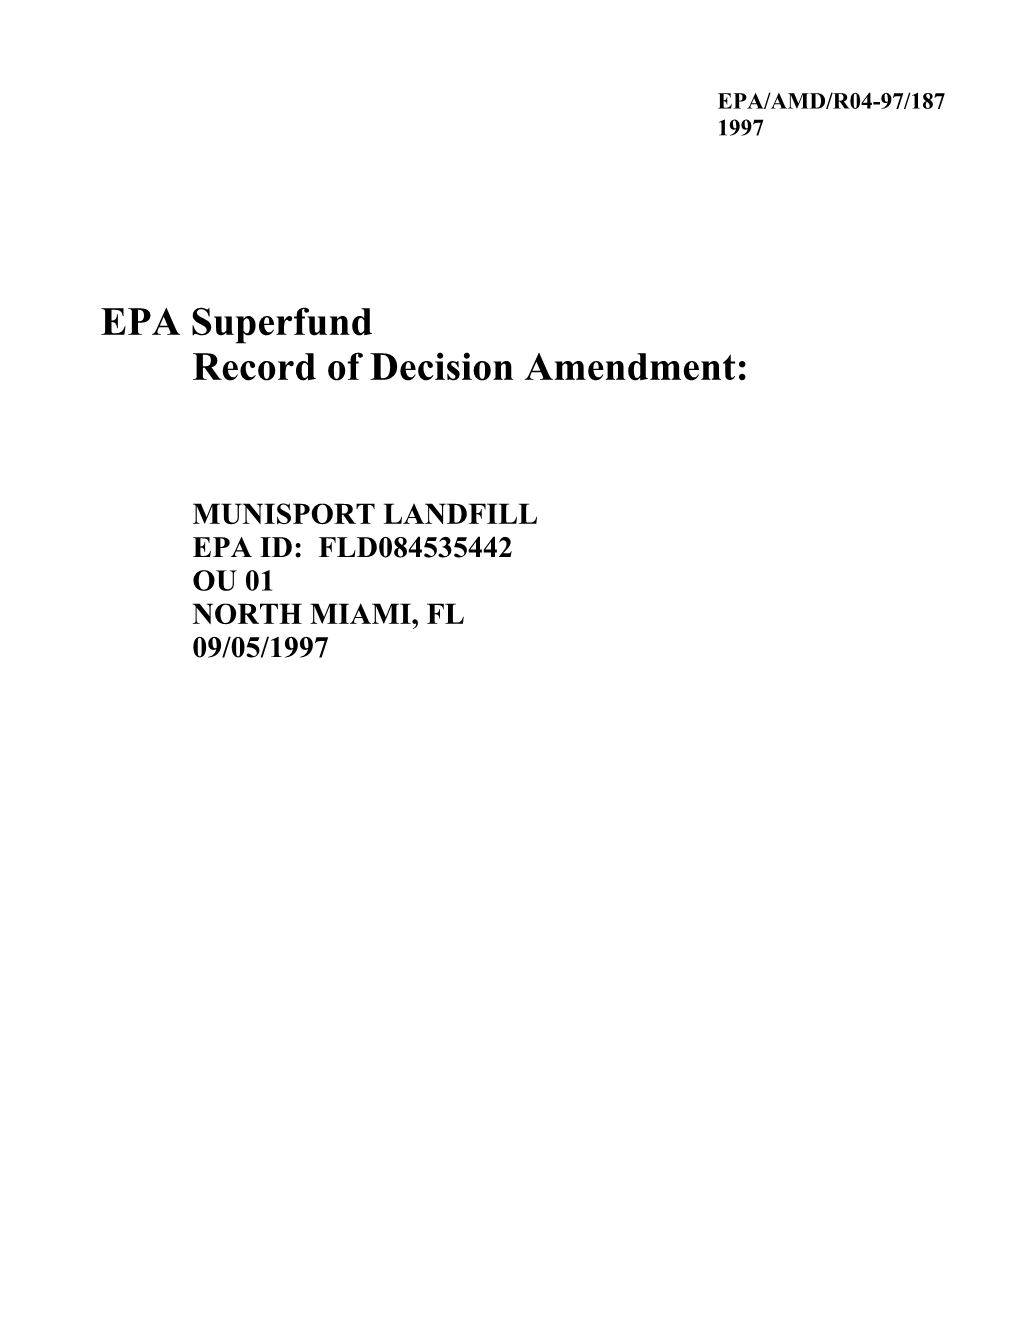 EPA Superfund Record of Decision Amendment